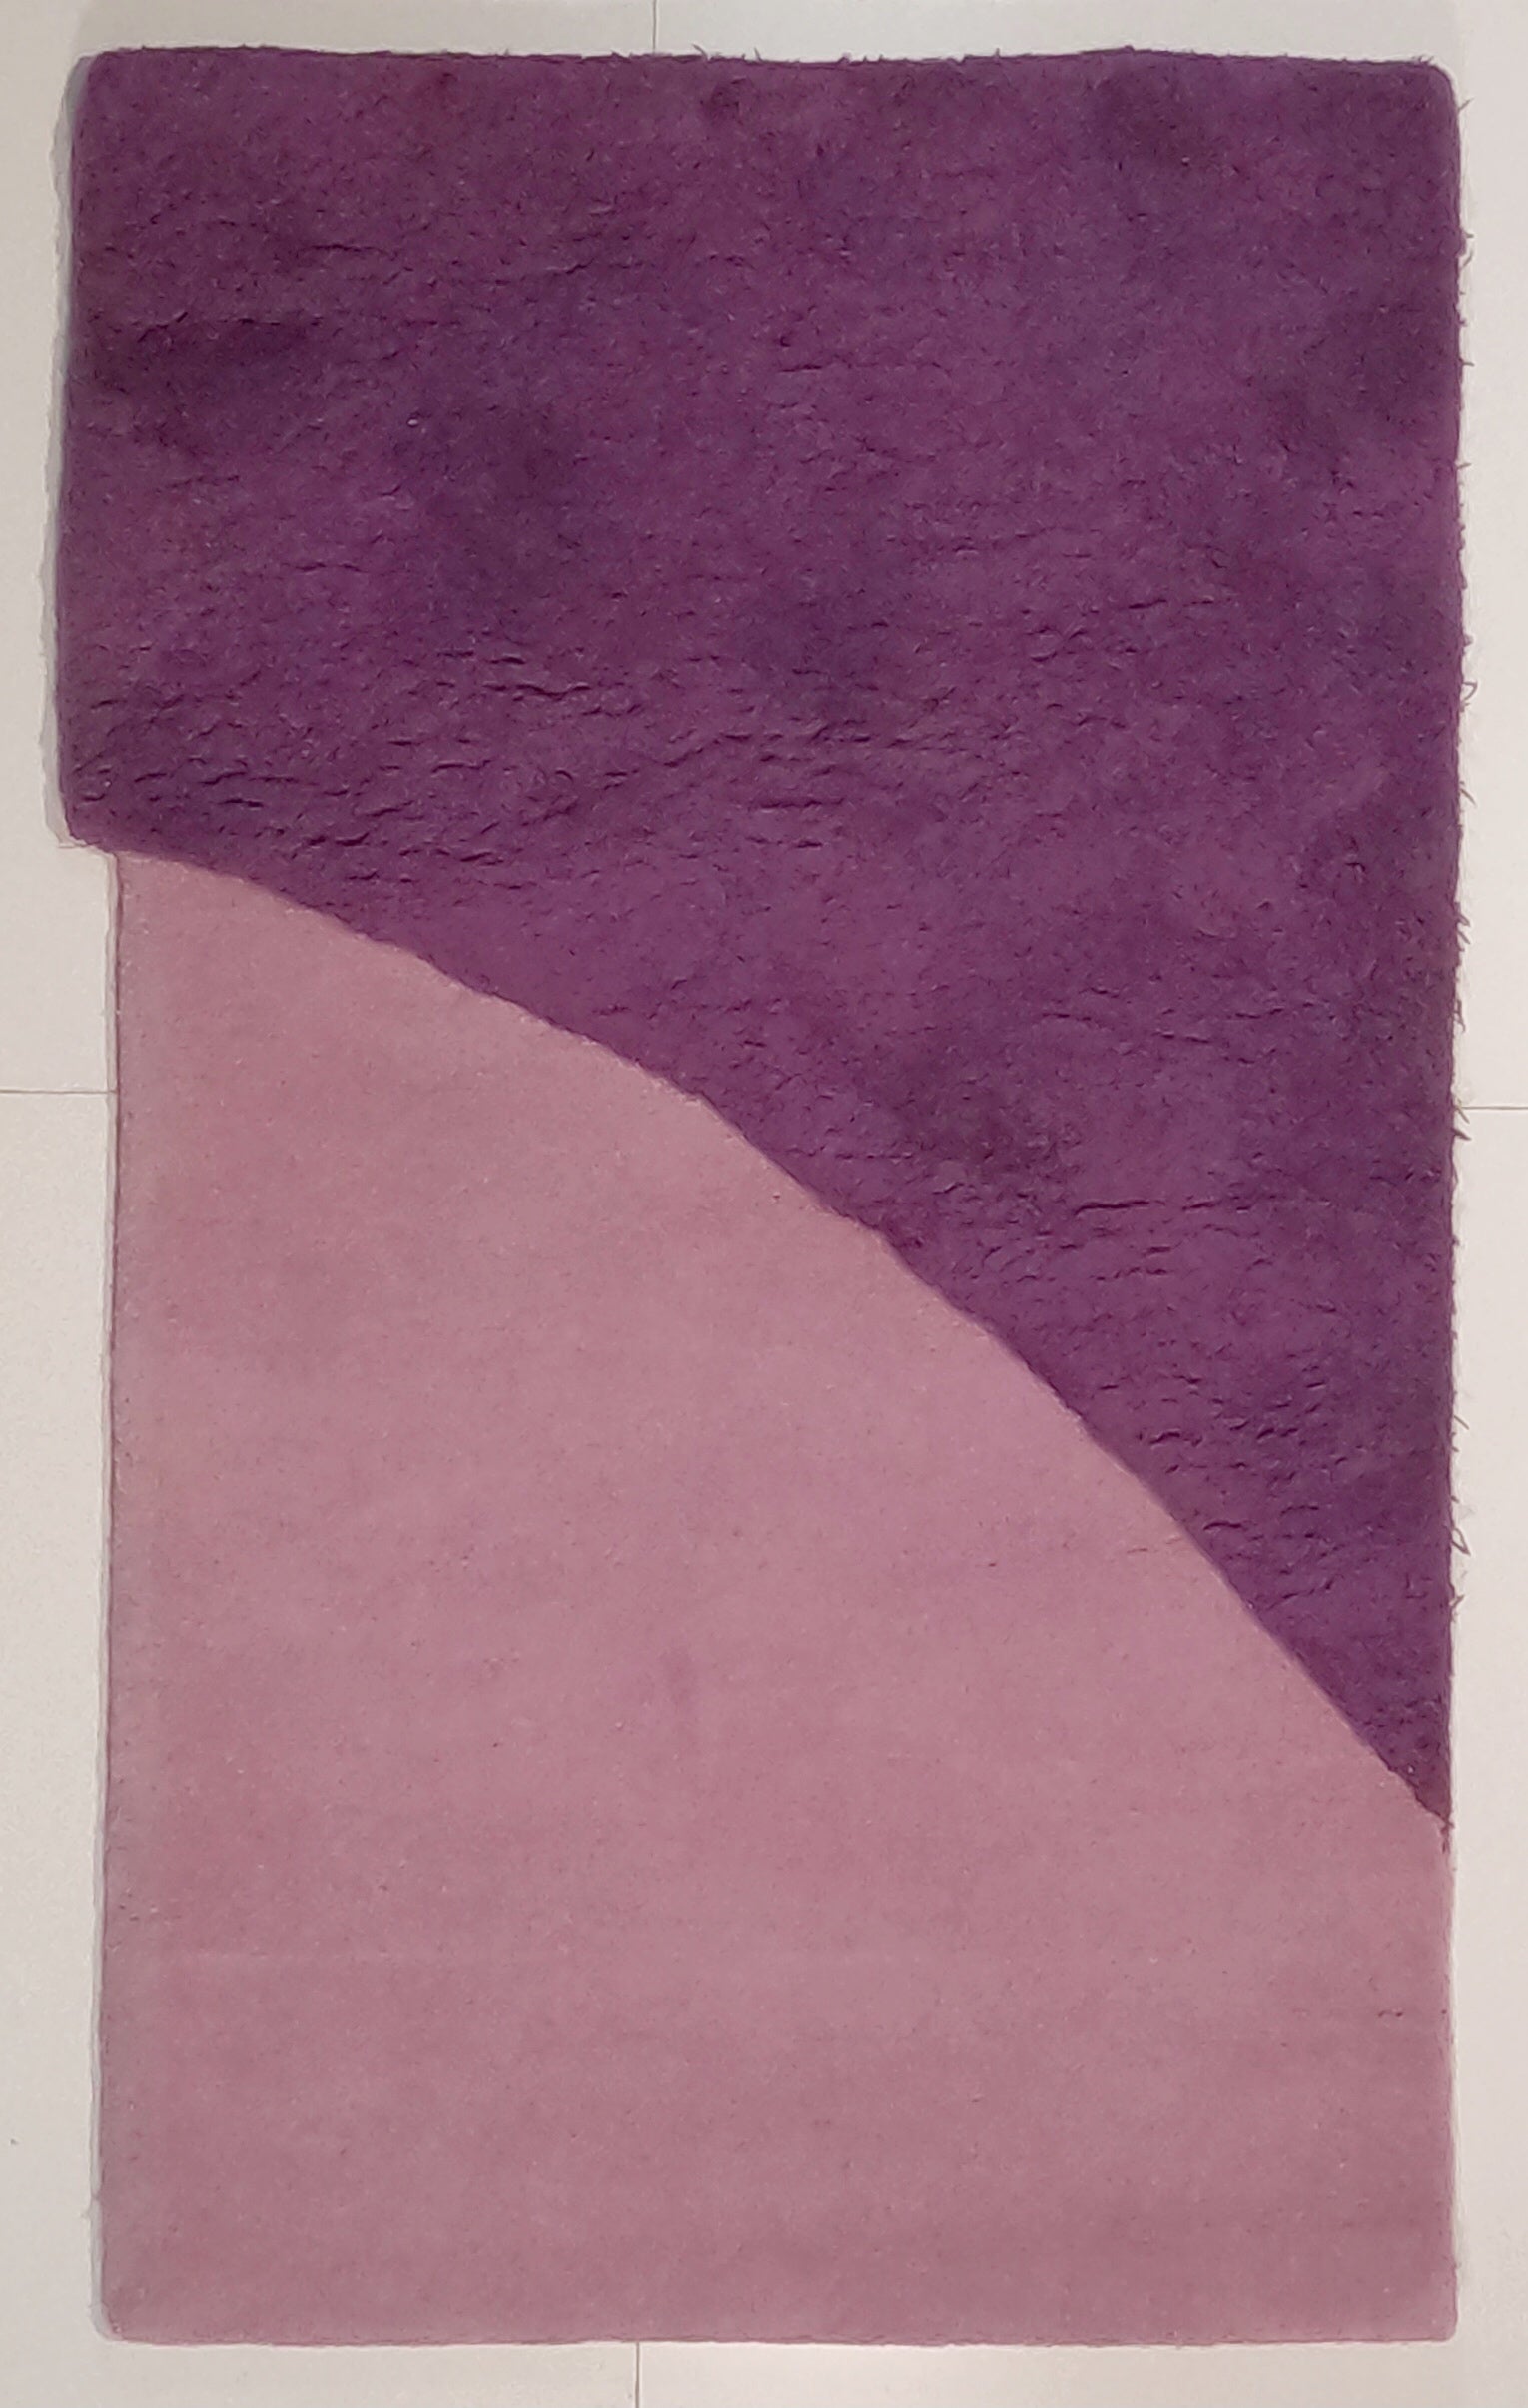 purple_carpet